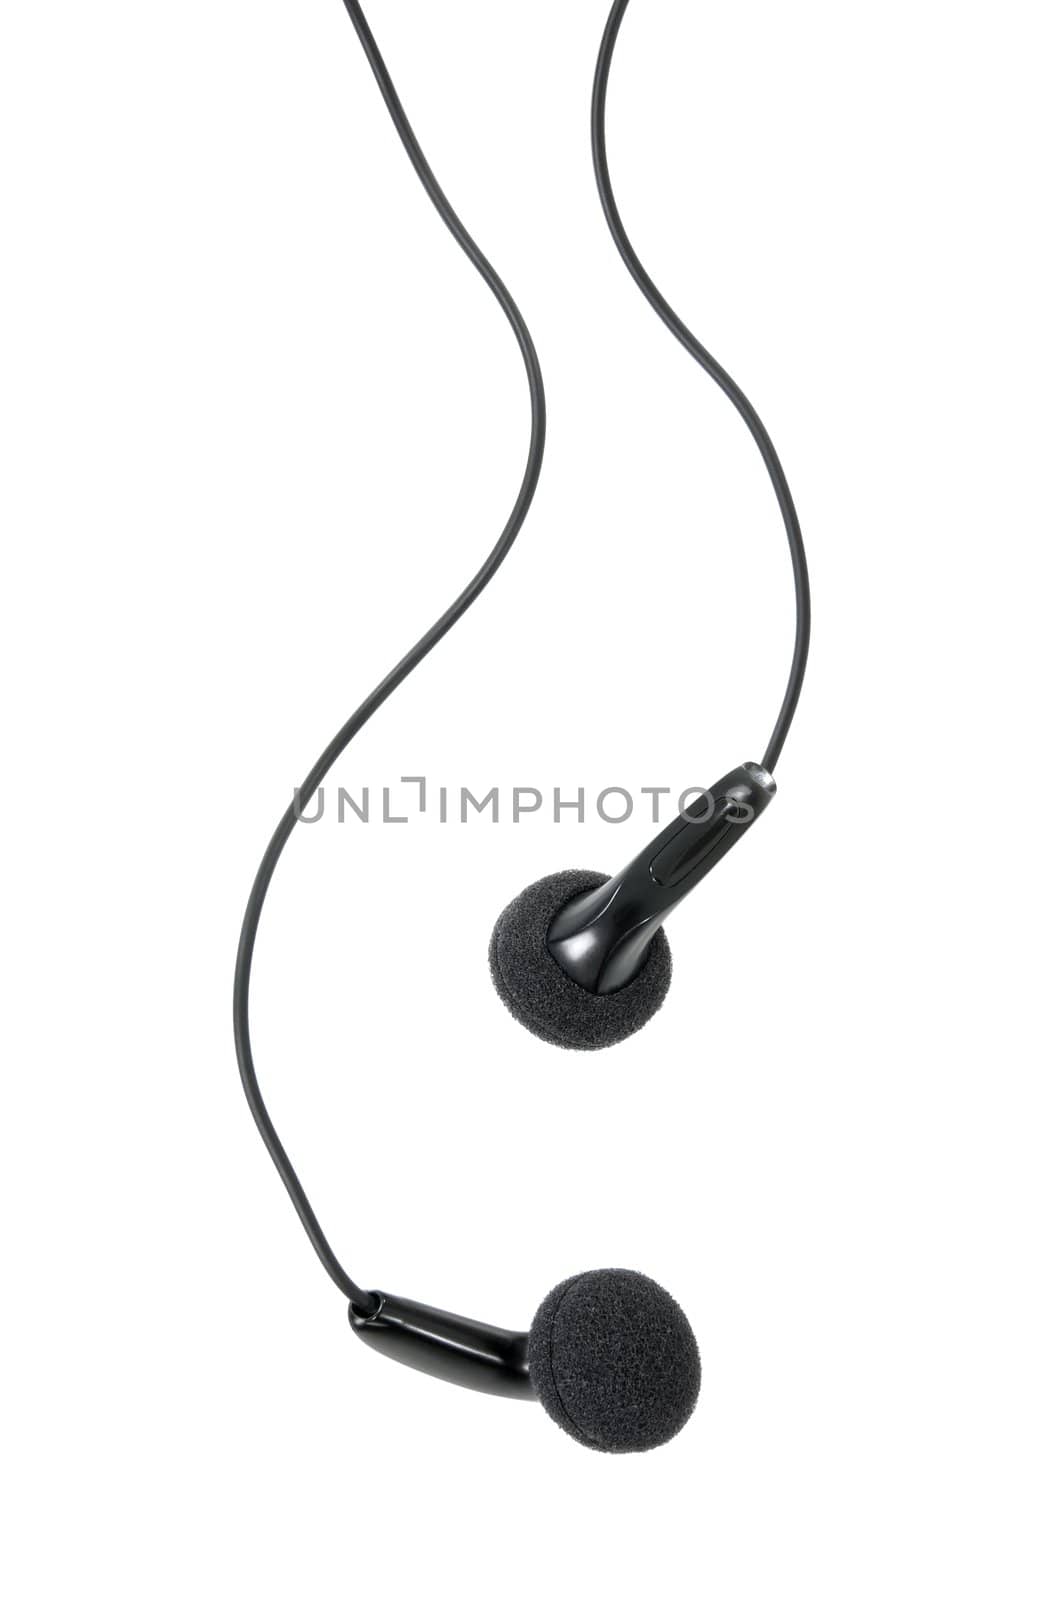 Black earphones isolated on white background.